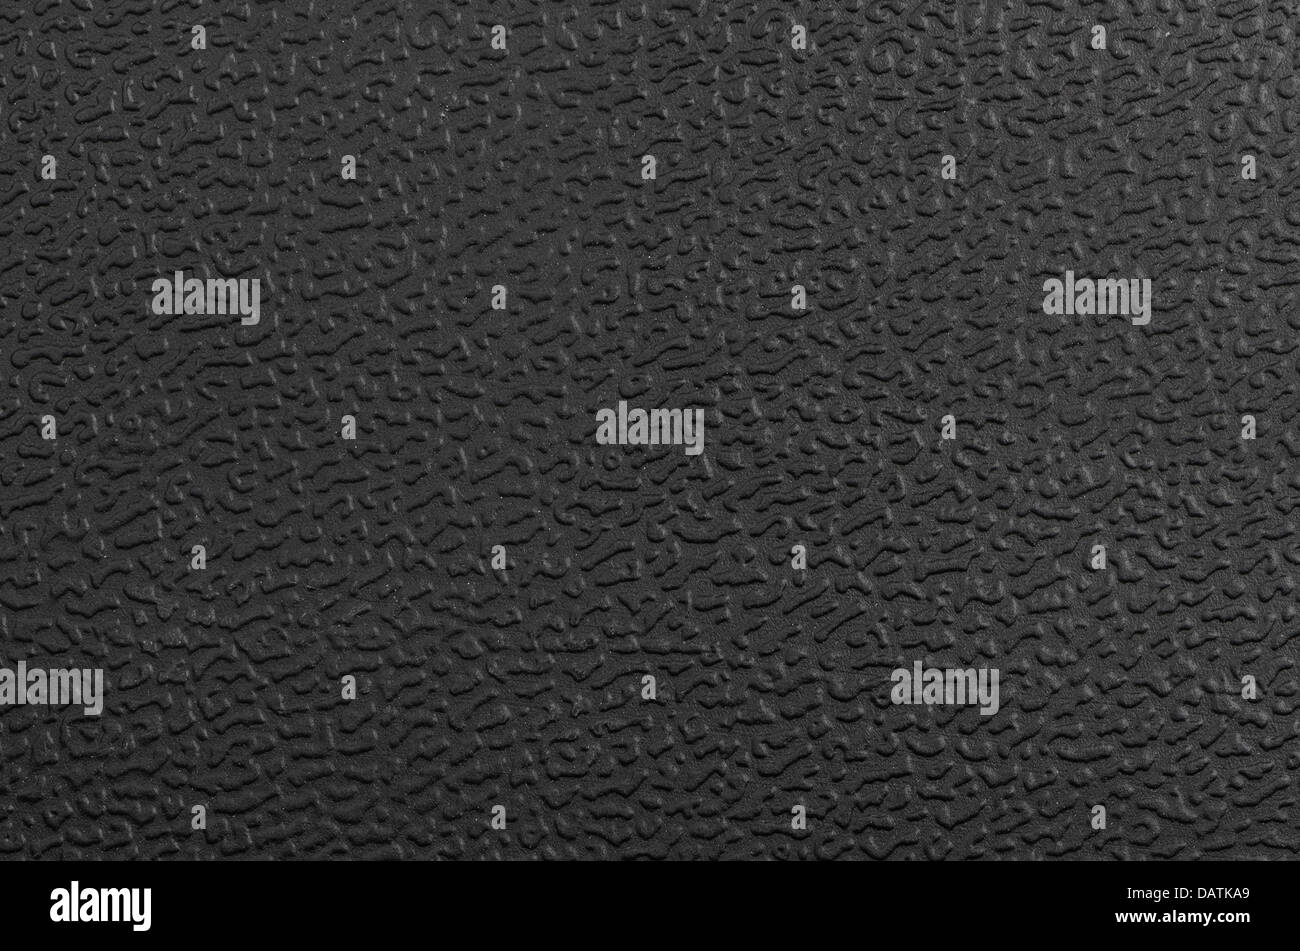 Closeup of black plastic surface texture. Stock Photo